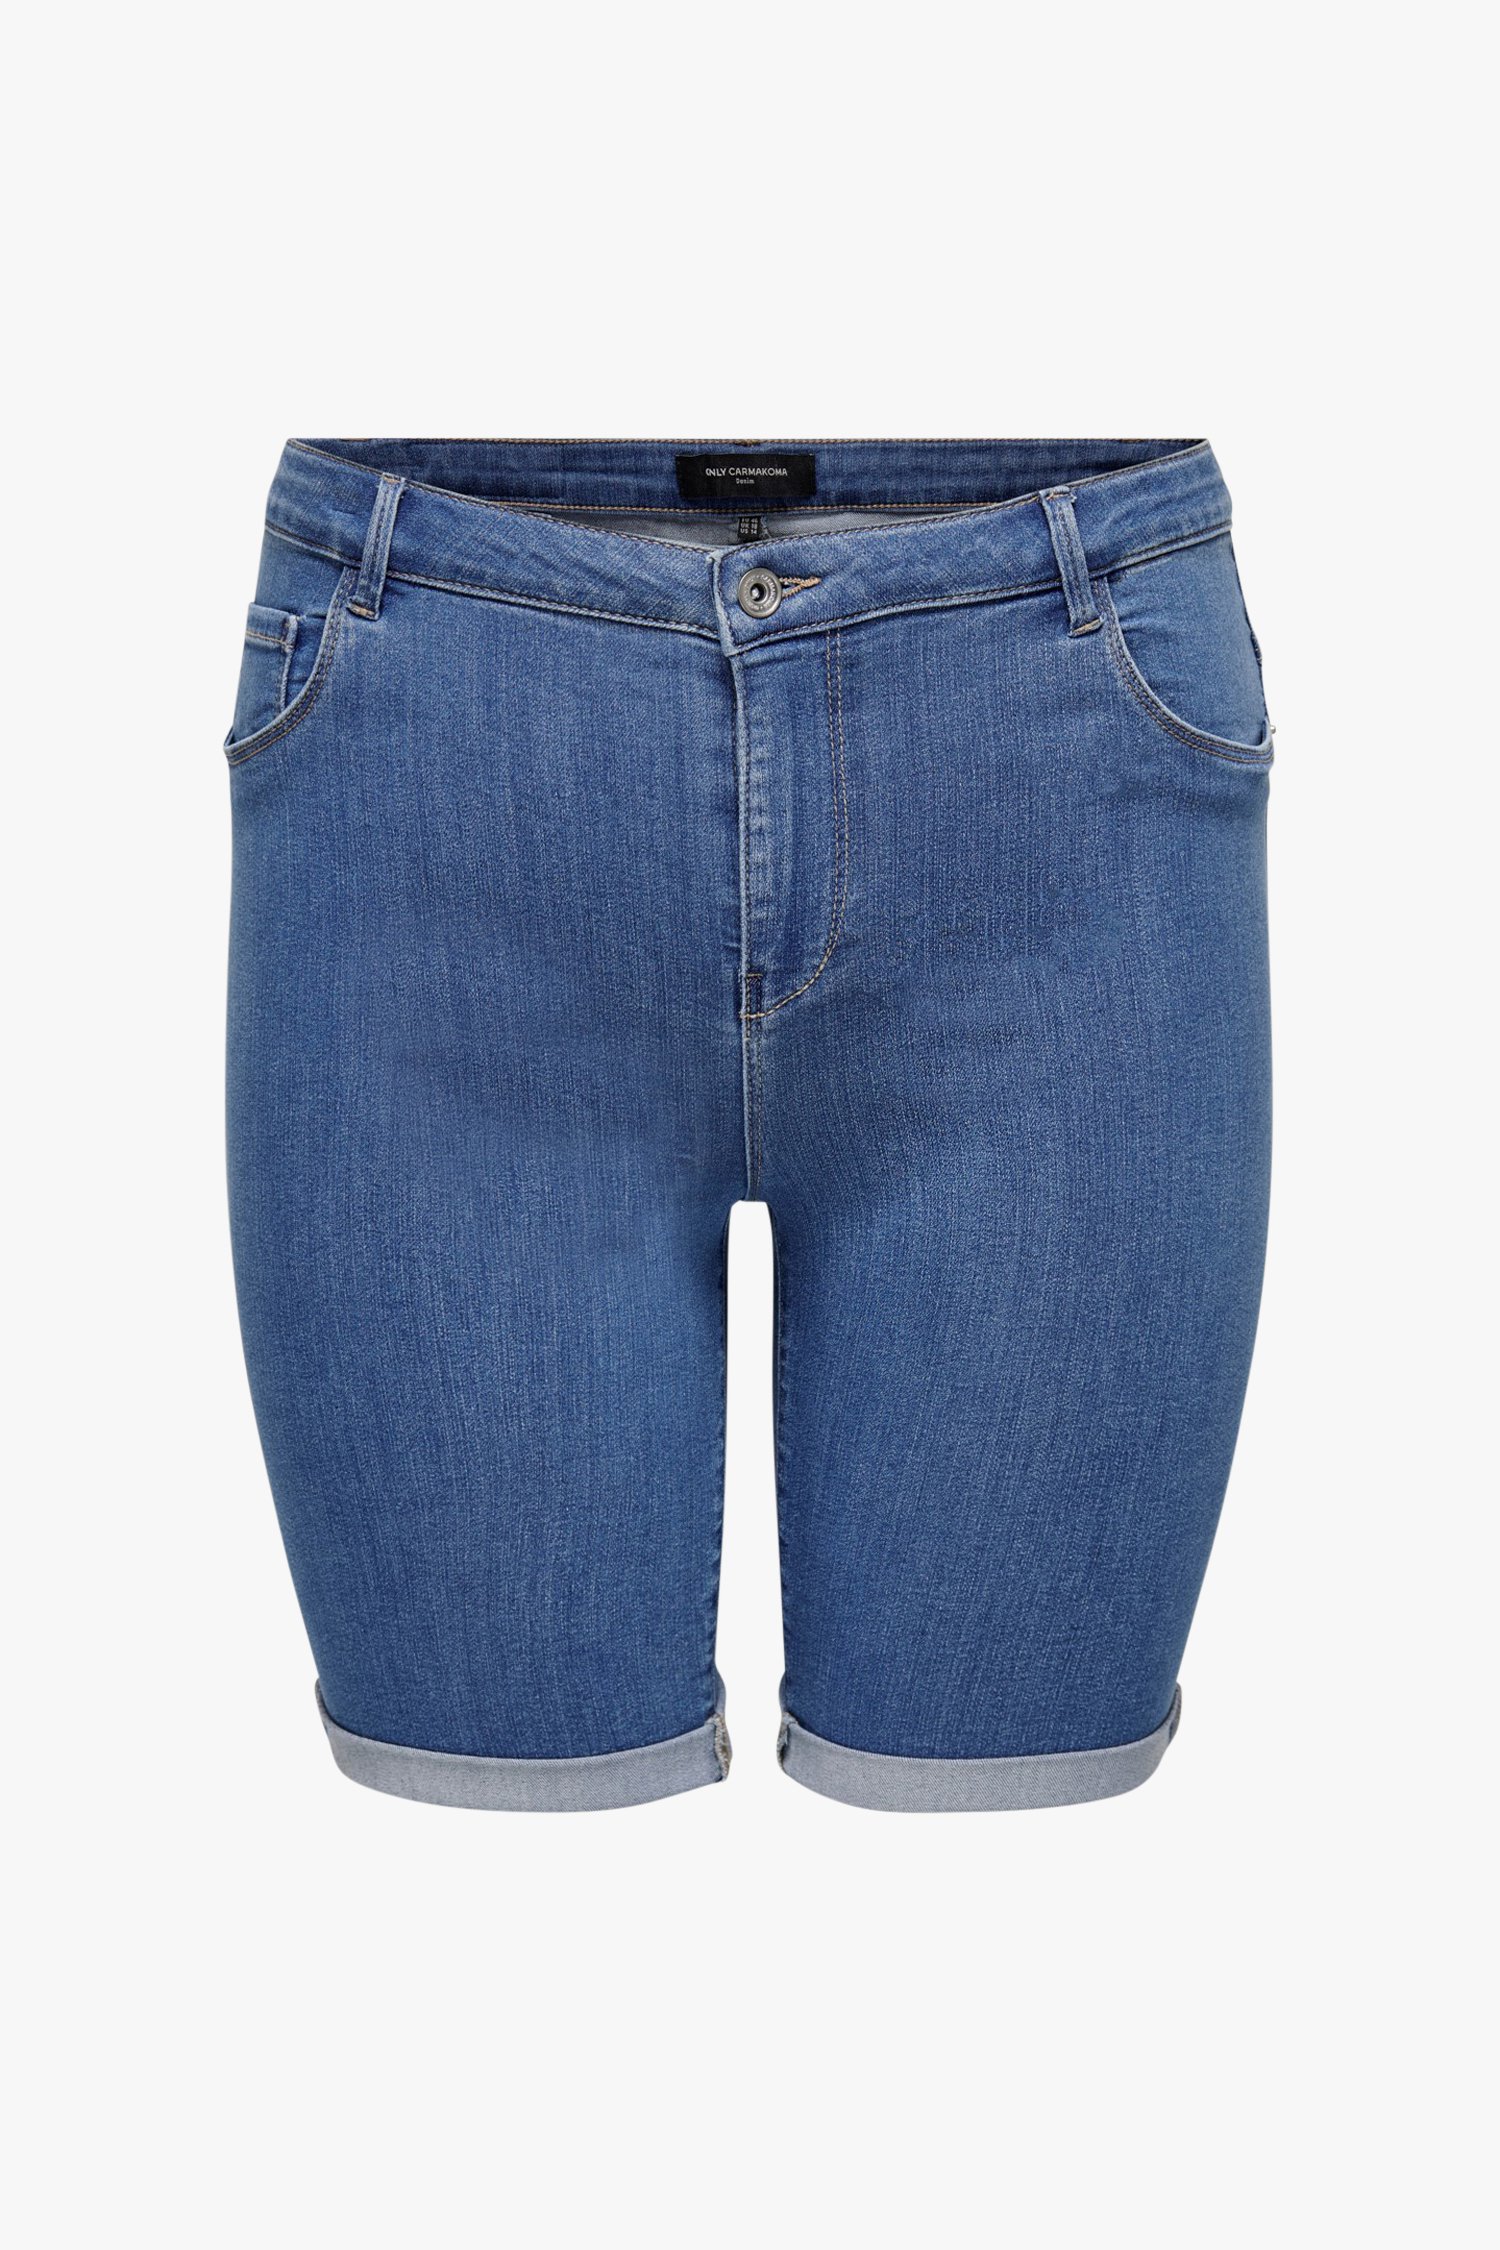 Blauwe jeansshort met stretch van Only Carmakoma voor Dames